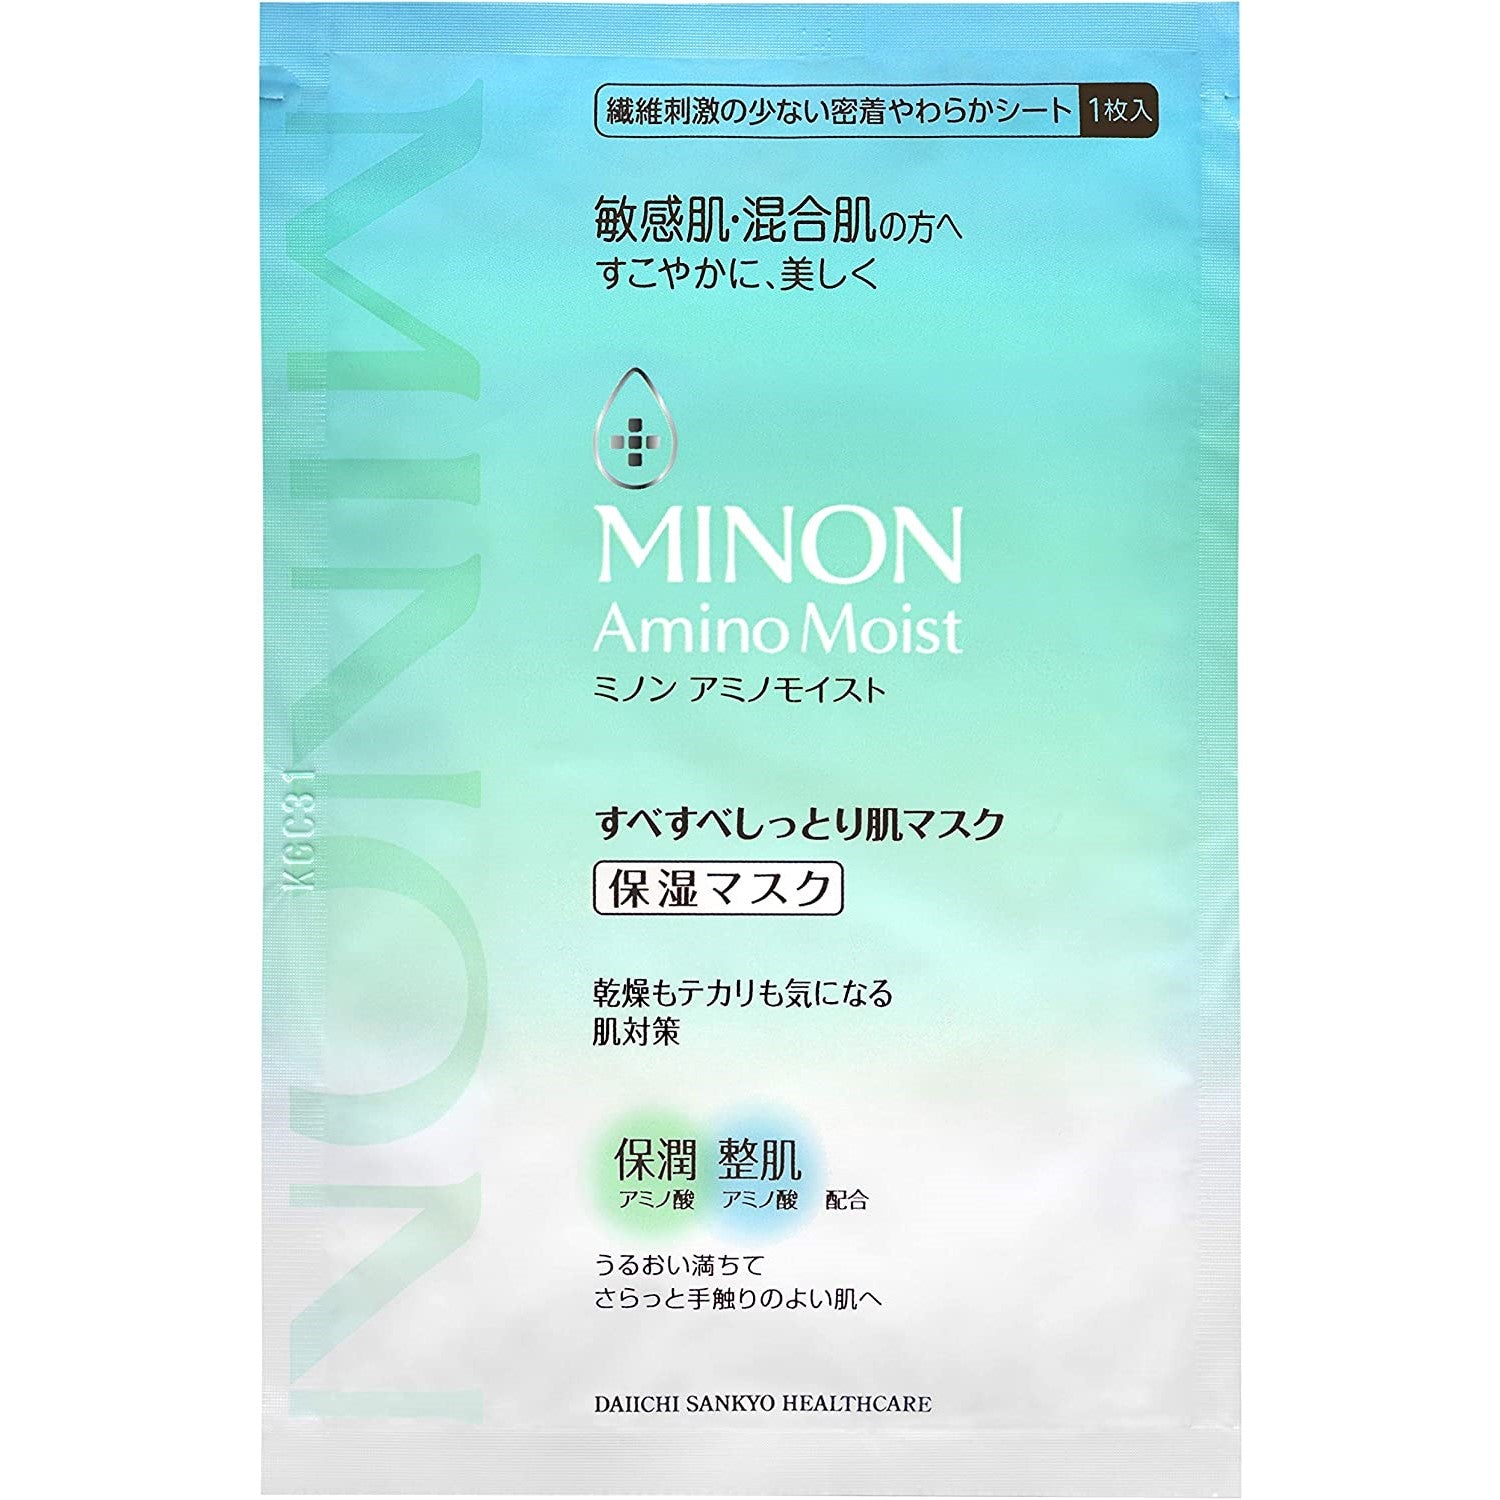 MINON Amino Moist Smooth & Skin Mask 22ml 4pcs